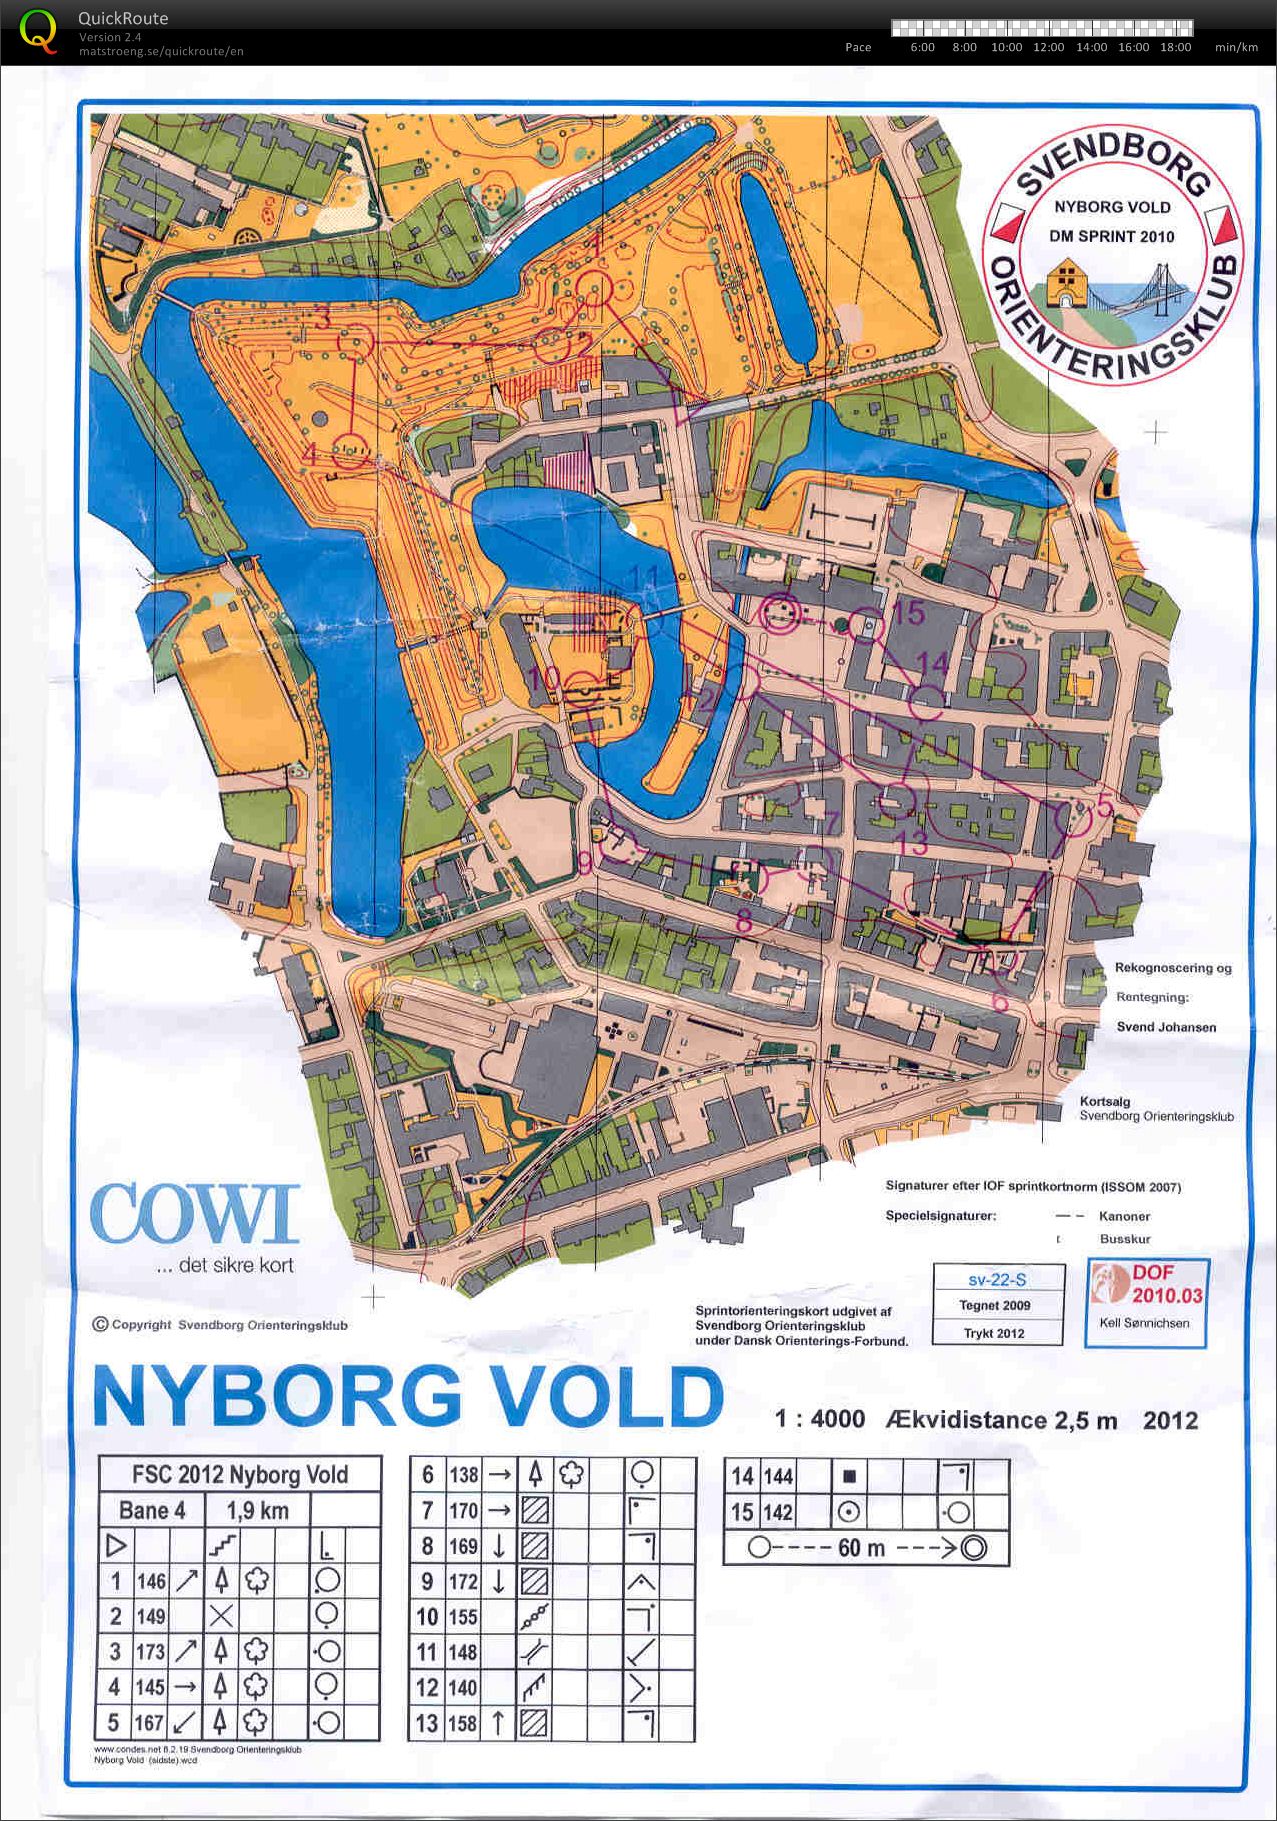 Nyborg Vold, Bane 4, D55, Pia Gade, 280512 (28-05-2012)